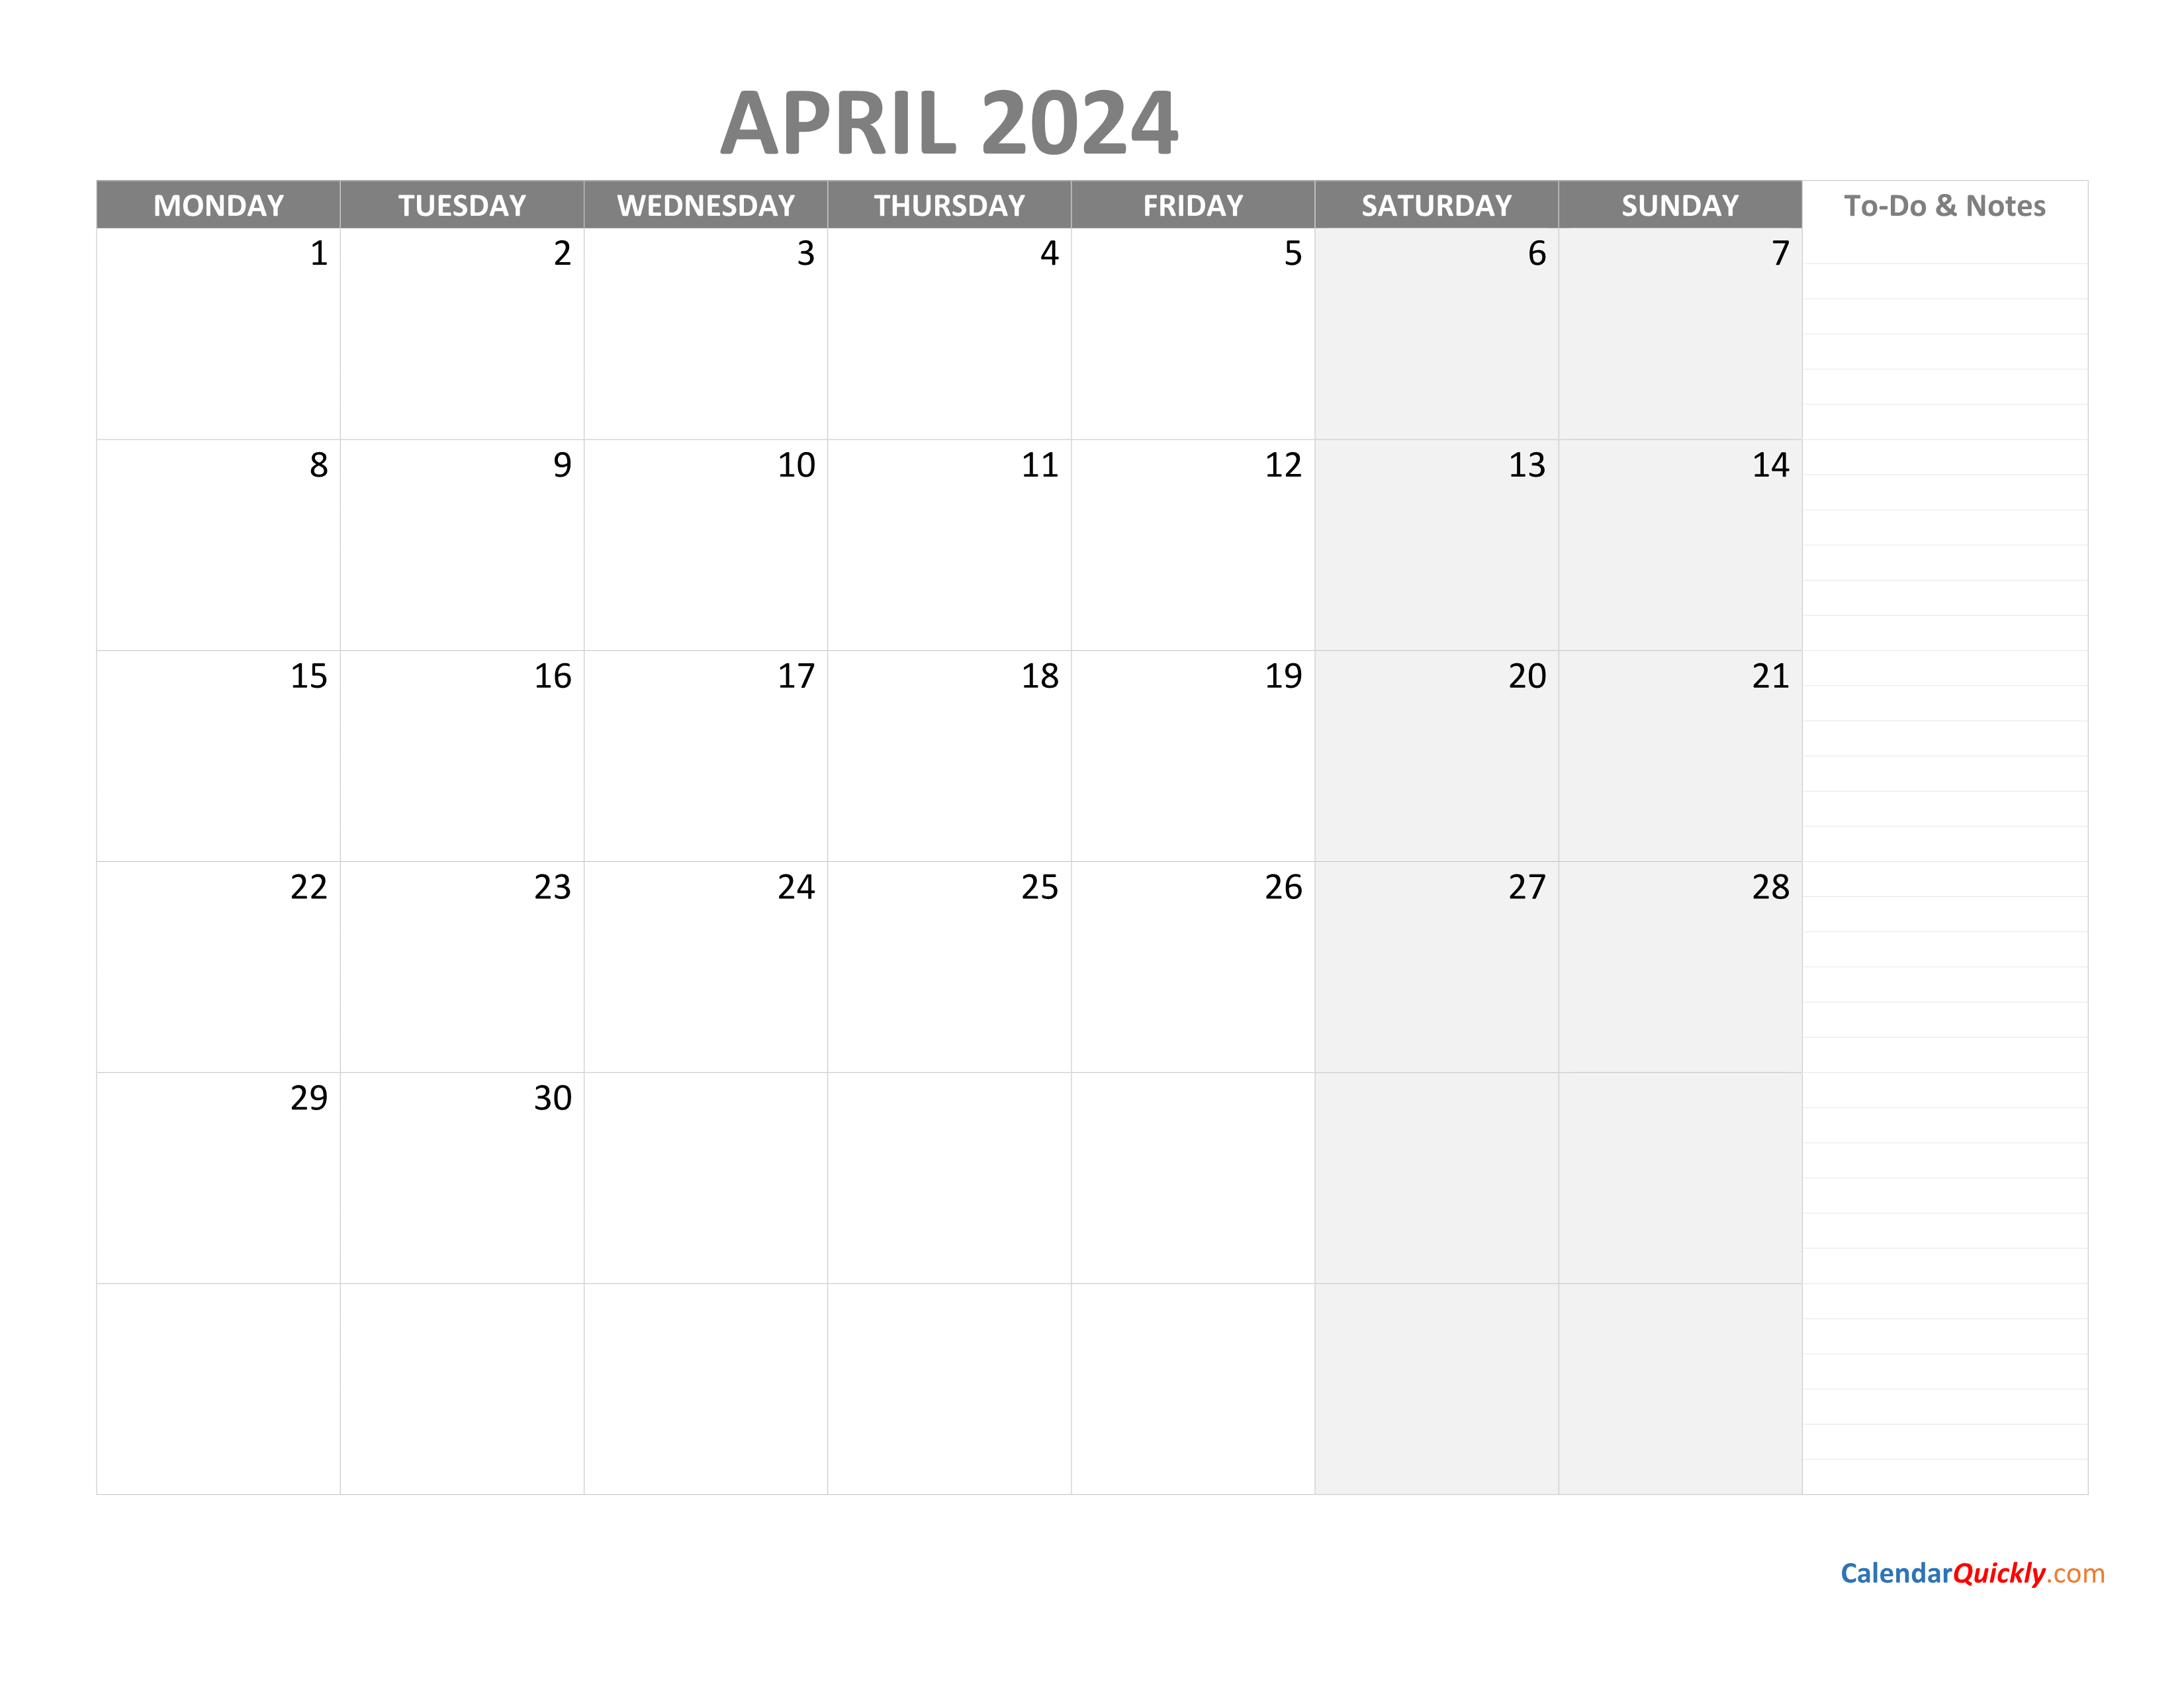 Еврейский календарь на 2024 год. Календарь 2024. Календарь 2024 для заметок. April 2024 календарь. Календарь February 2024.